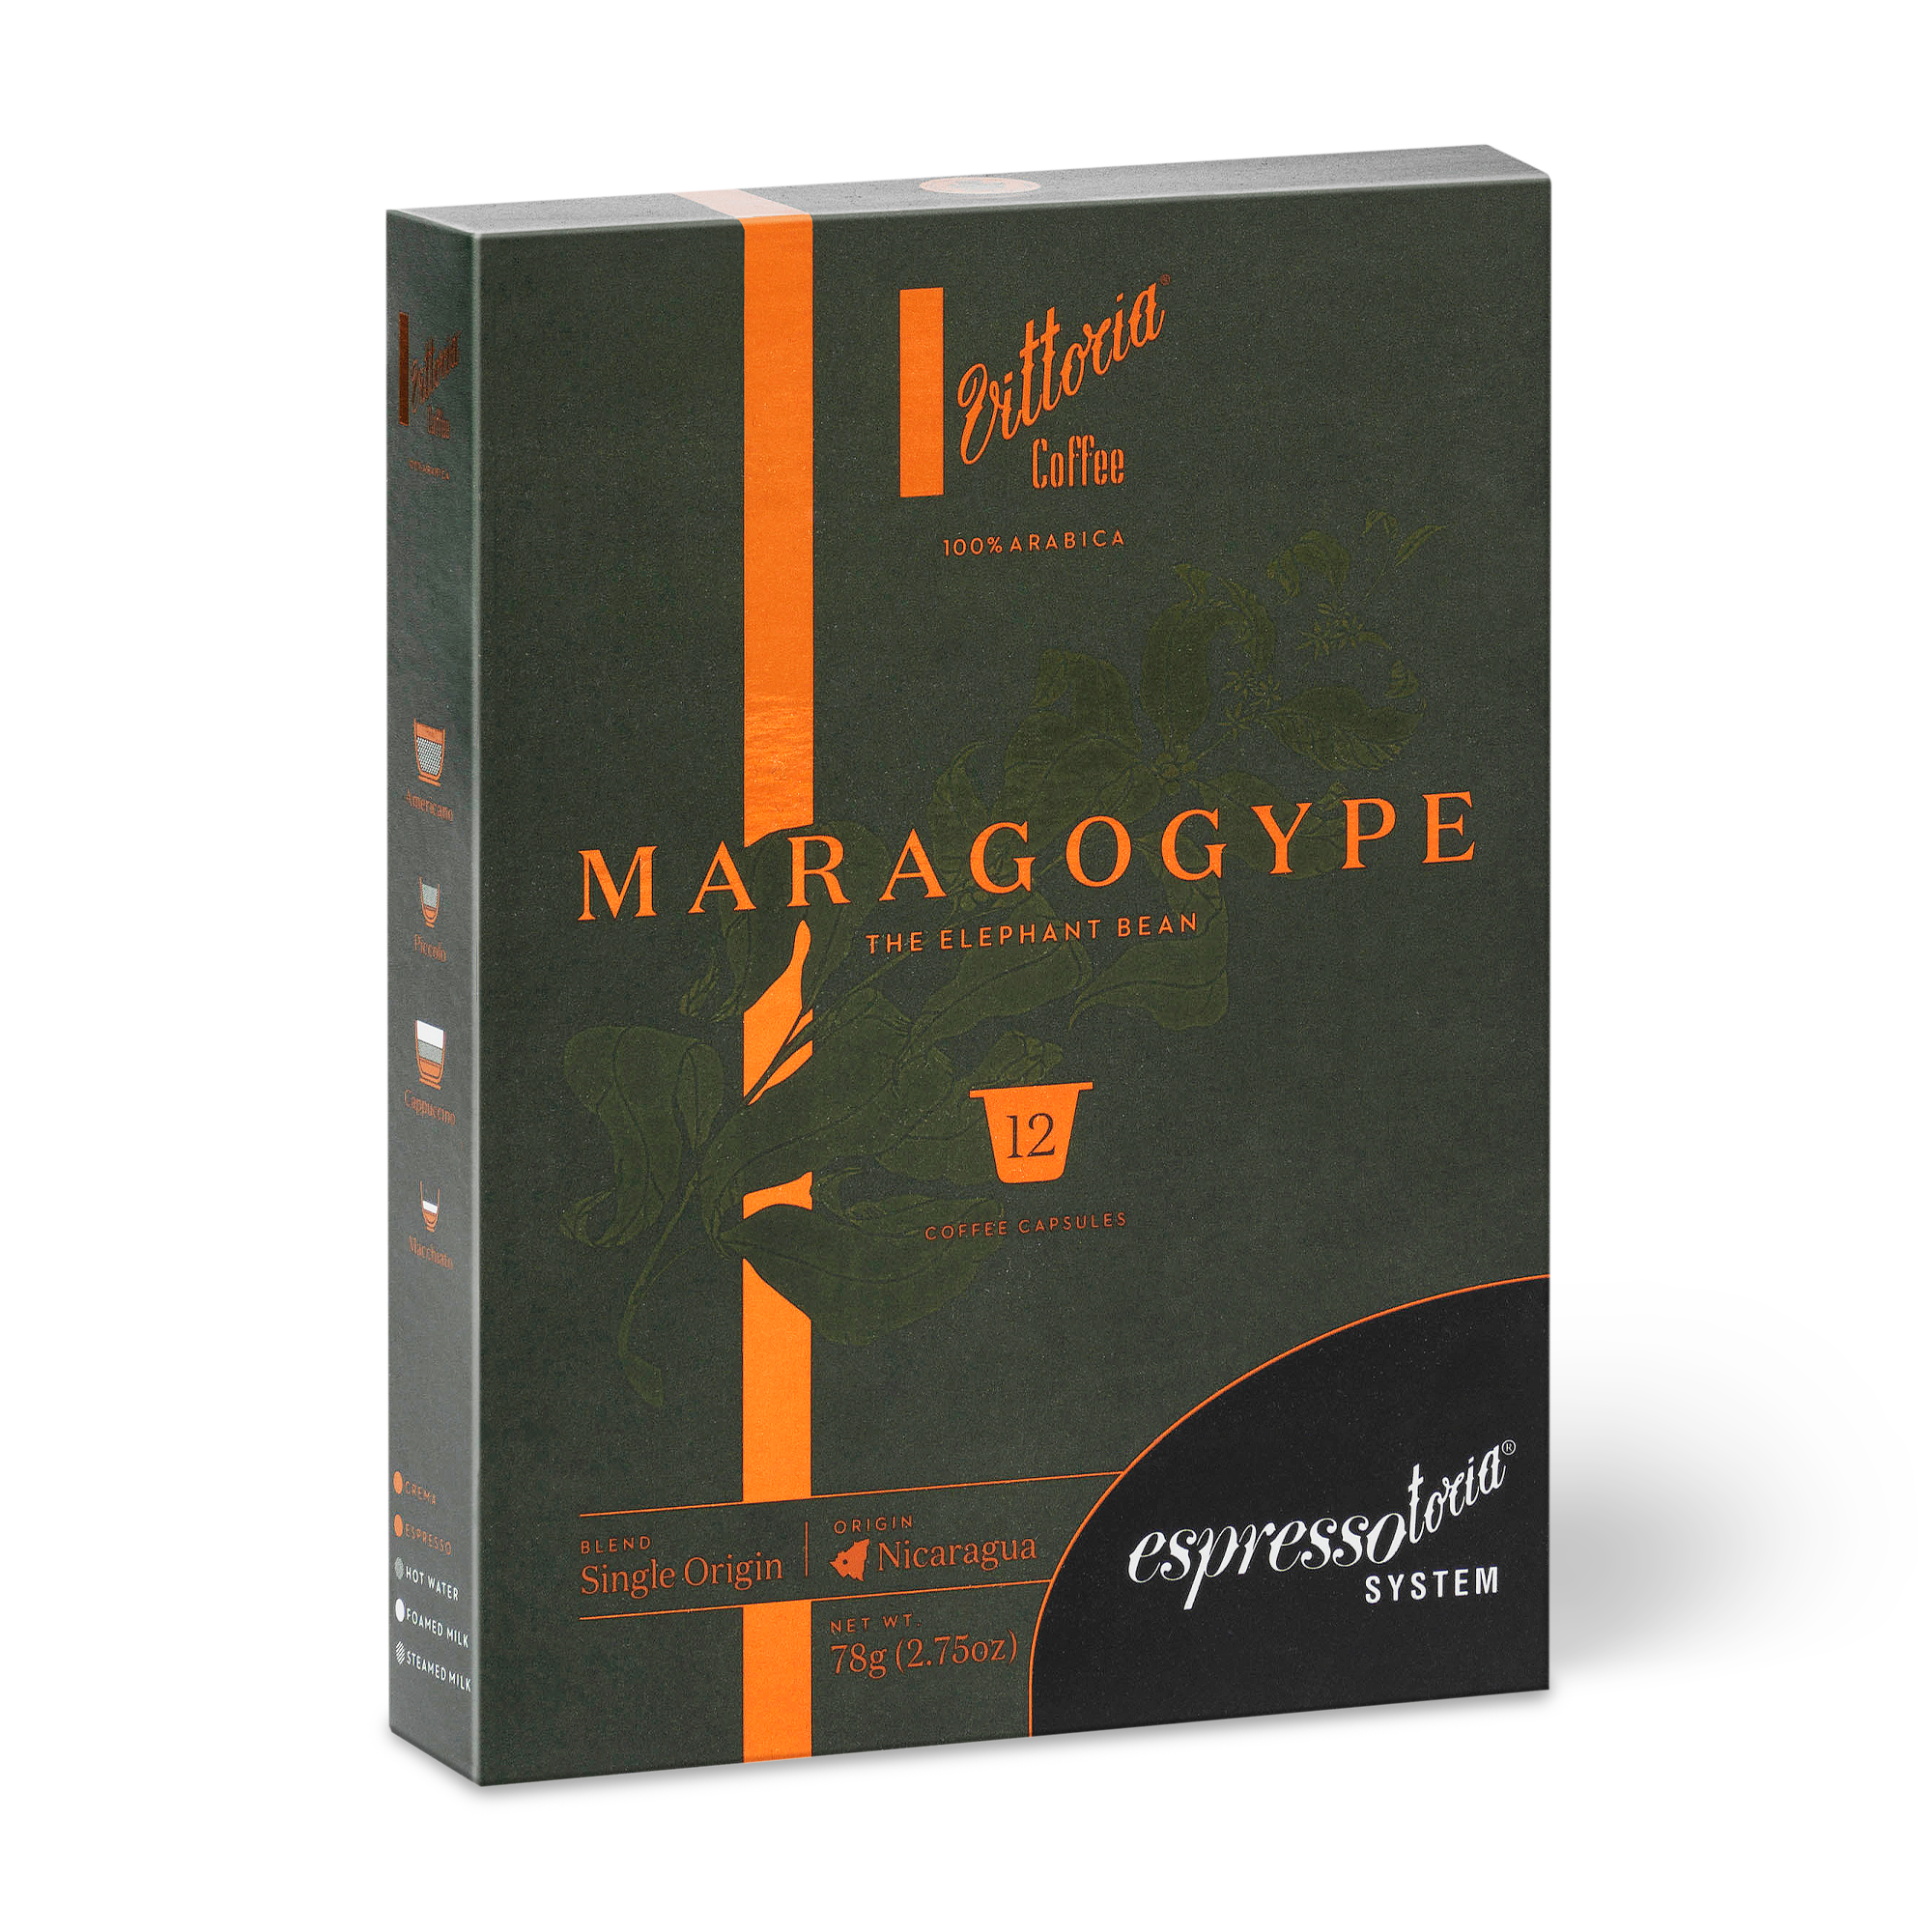 Vittoria Coffee Single Origin Maragogype Coffee Capsules